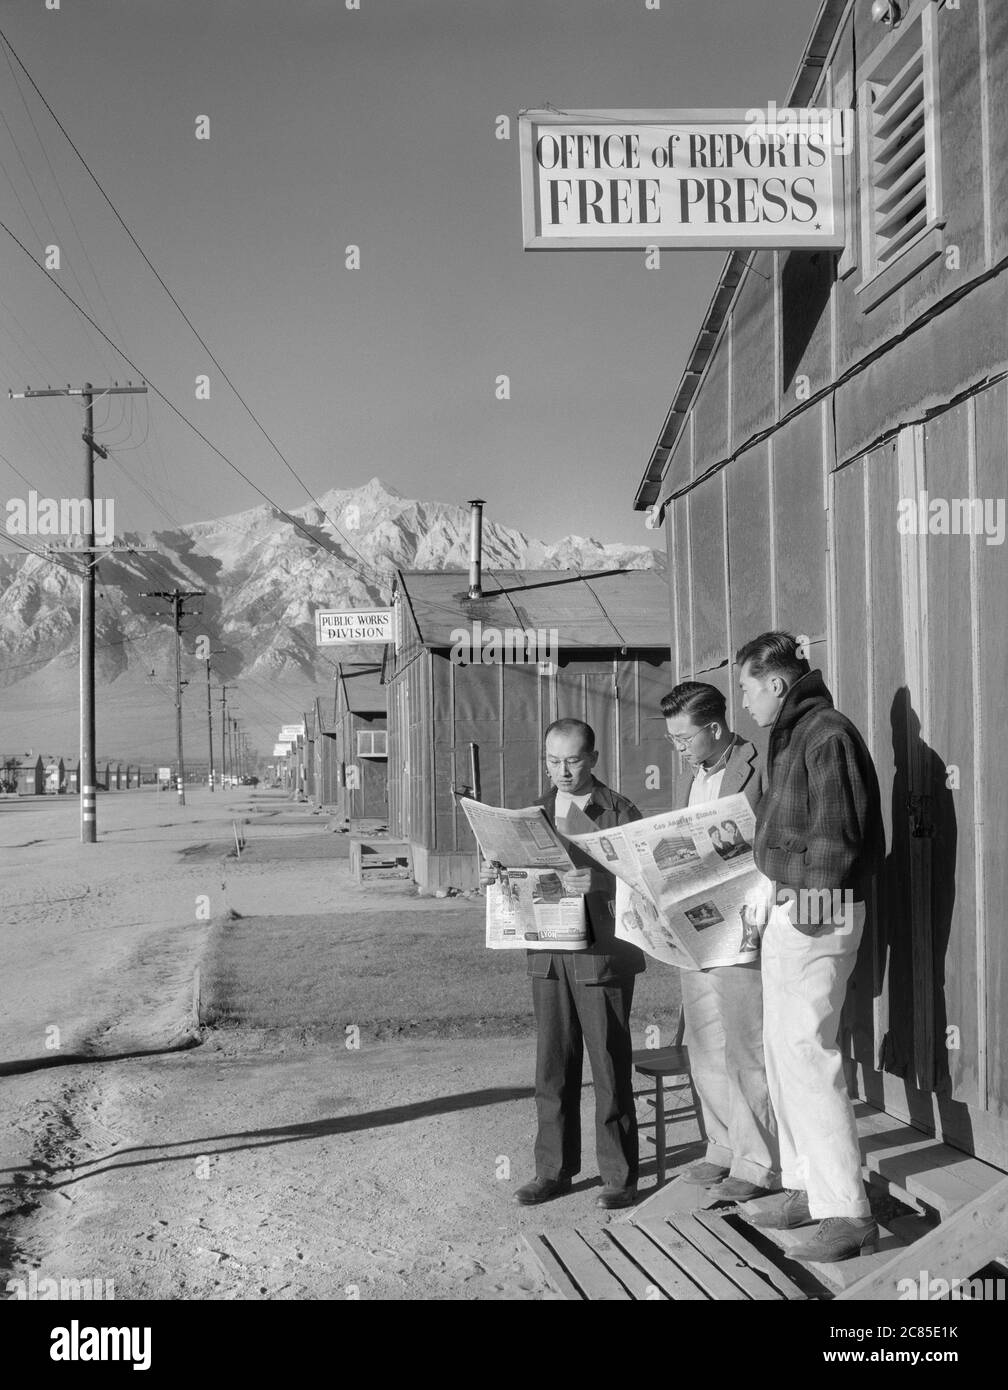 Roy Takeno (Editor) and group reading Newspapers in front of Office, Yuichi Hirata, Nabuo Samamura, Manzanar Relocation Center, California, USA, Ansel Adams, Manzanar War Relocation Center photographs, 1943 Stock Photo